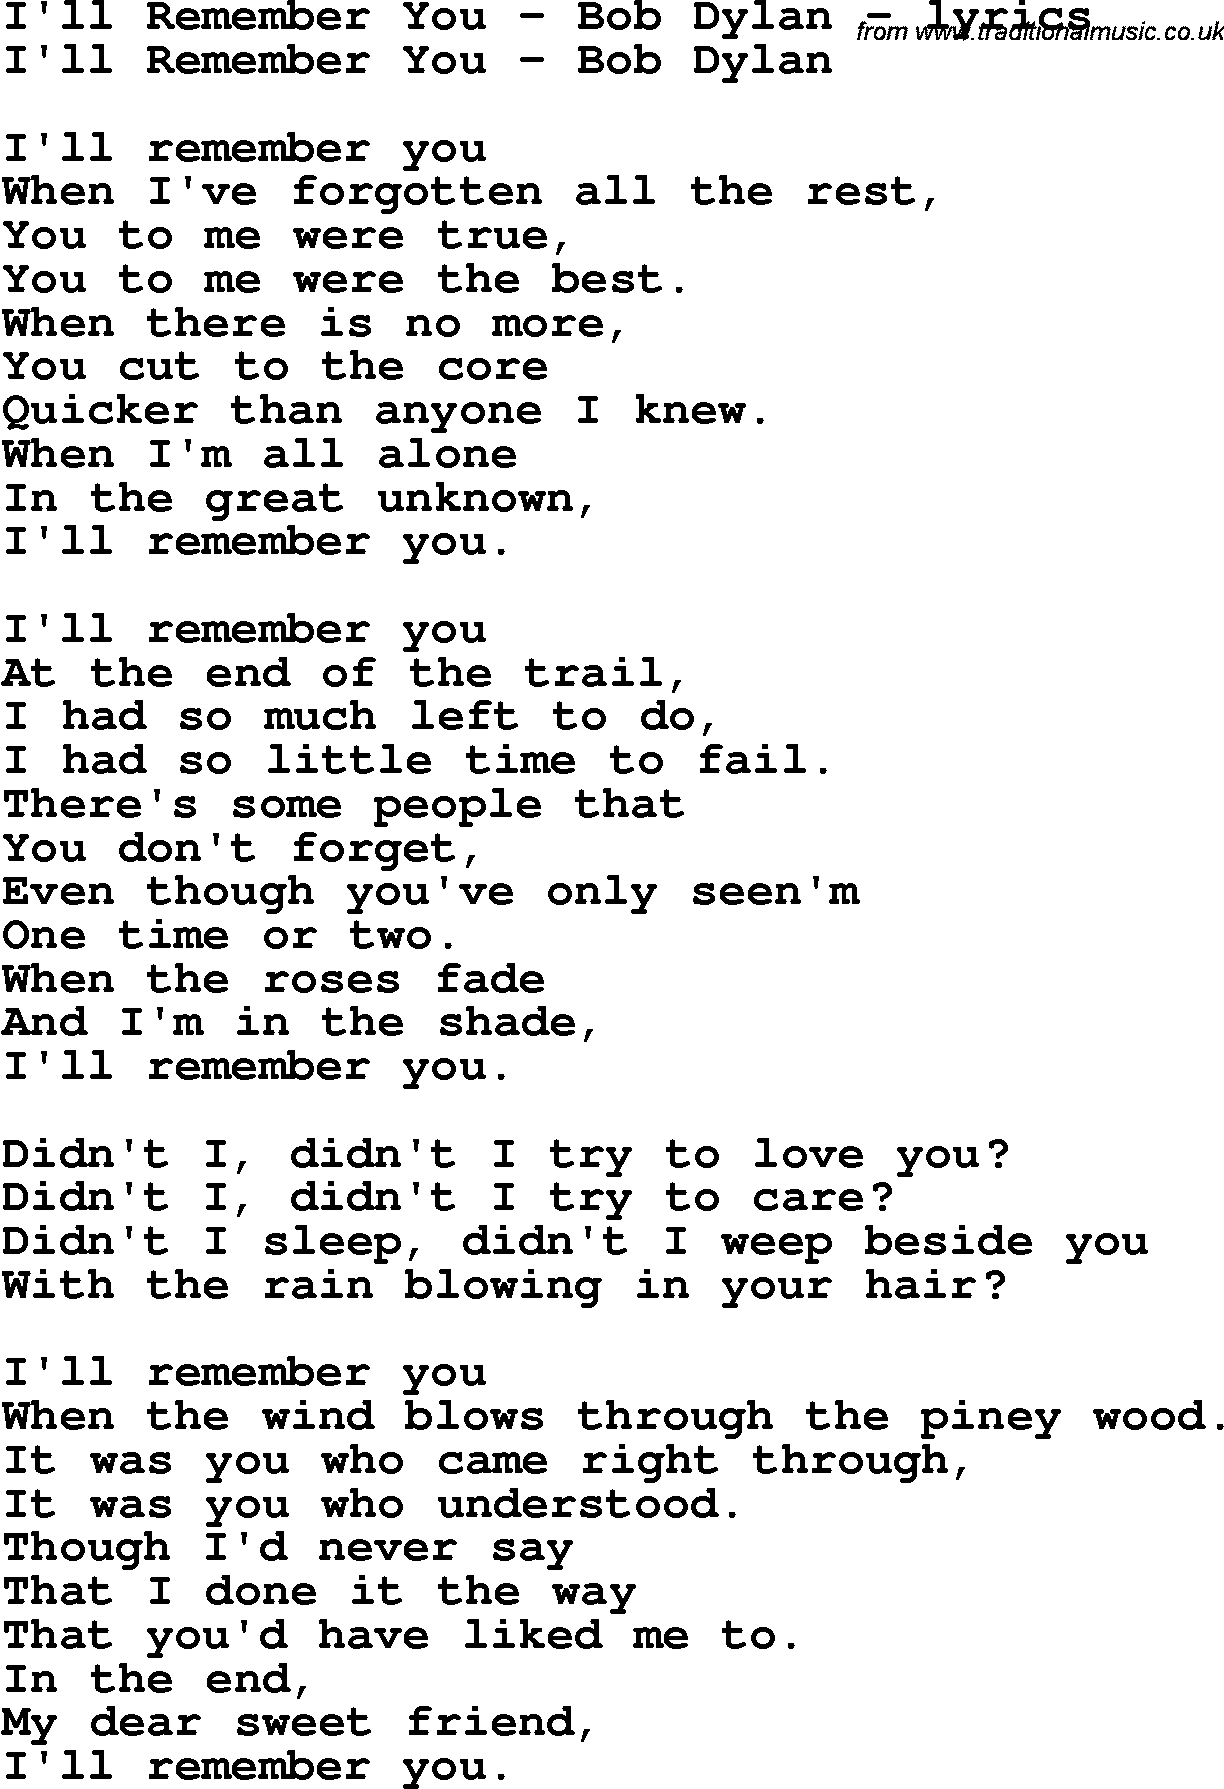 Love Song Lyrics for: I'll Remember You - Bob Dylan